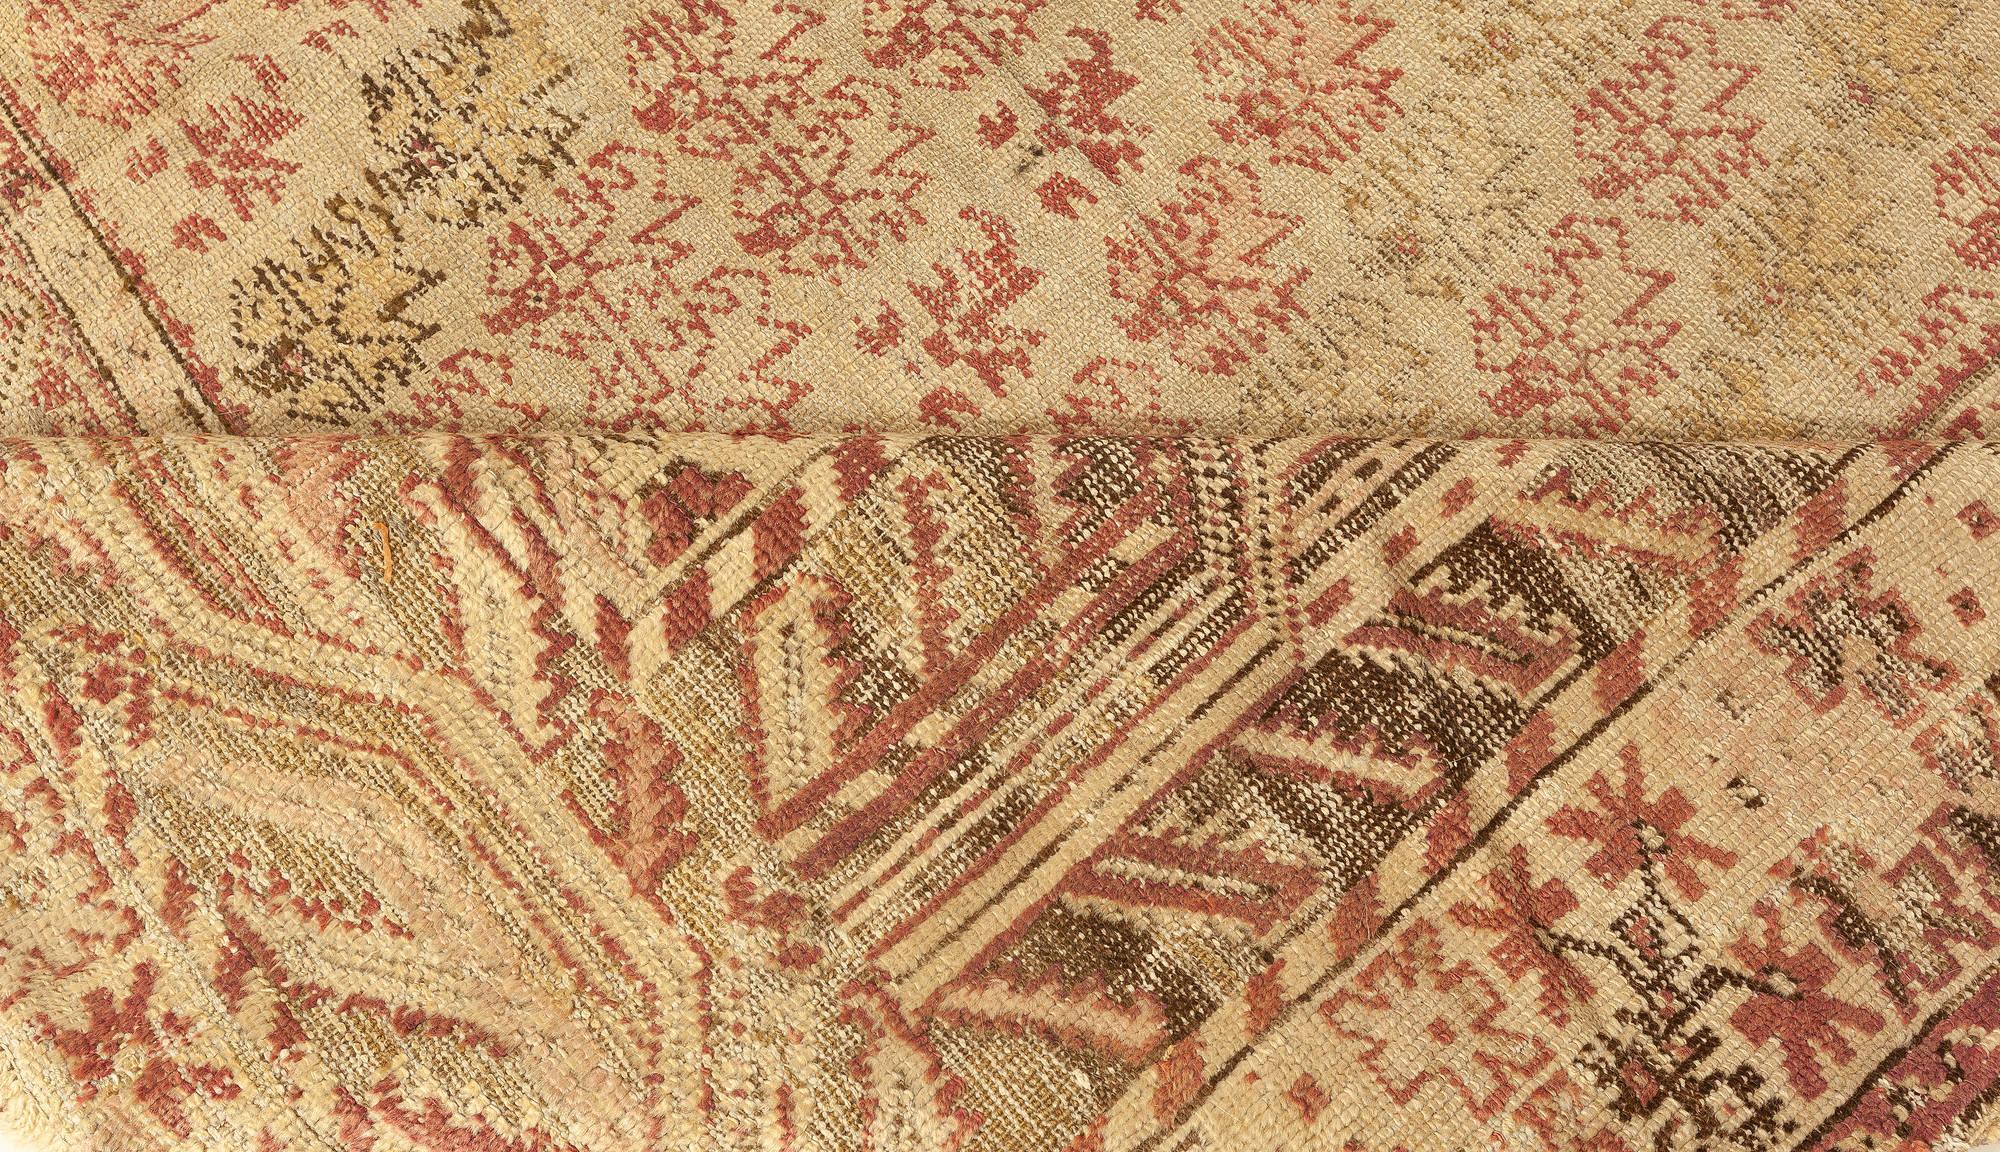 Authentic 19th Century Red Handmade Turkish Ghiordes rug
Size: 13'0